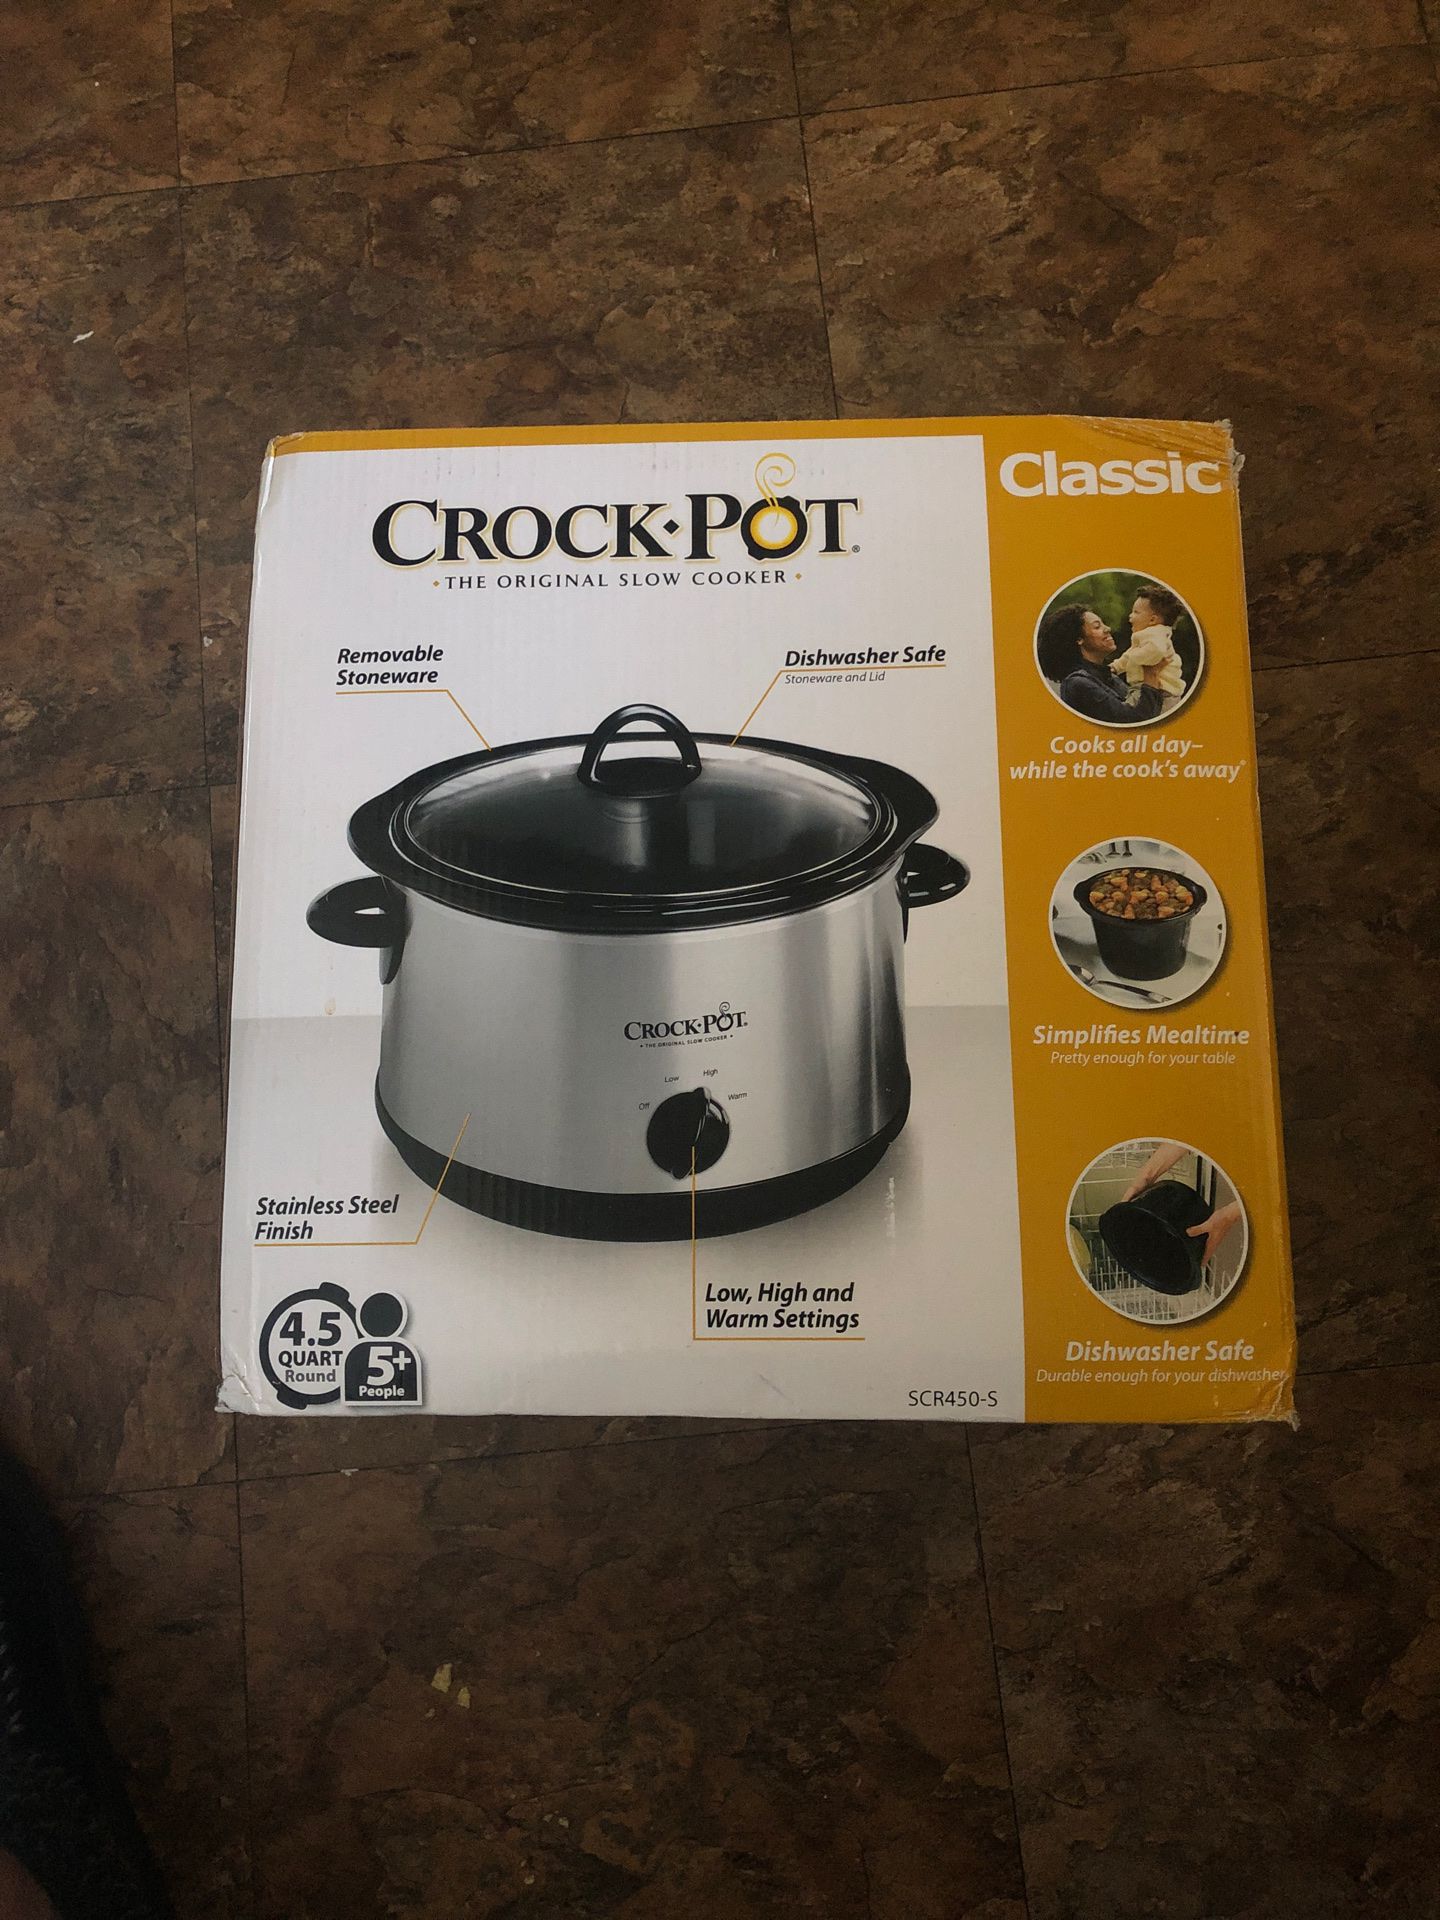 Crockpot the original slow cooker